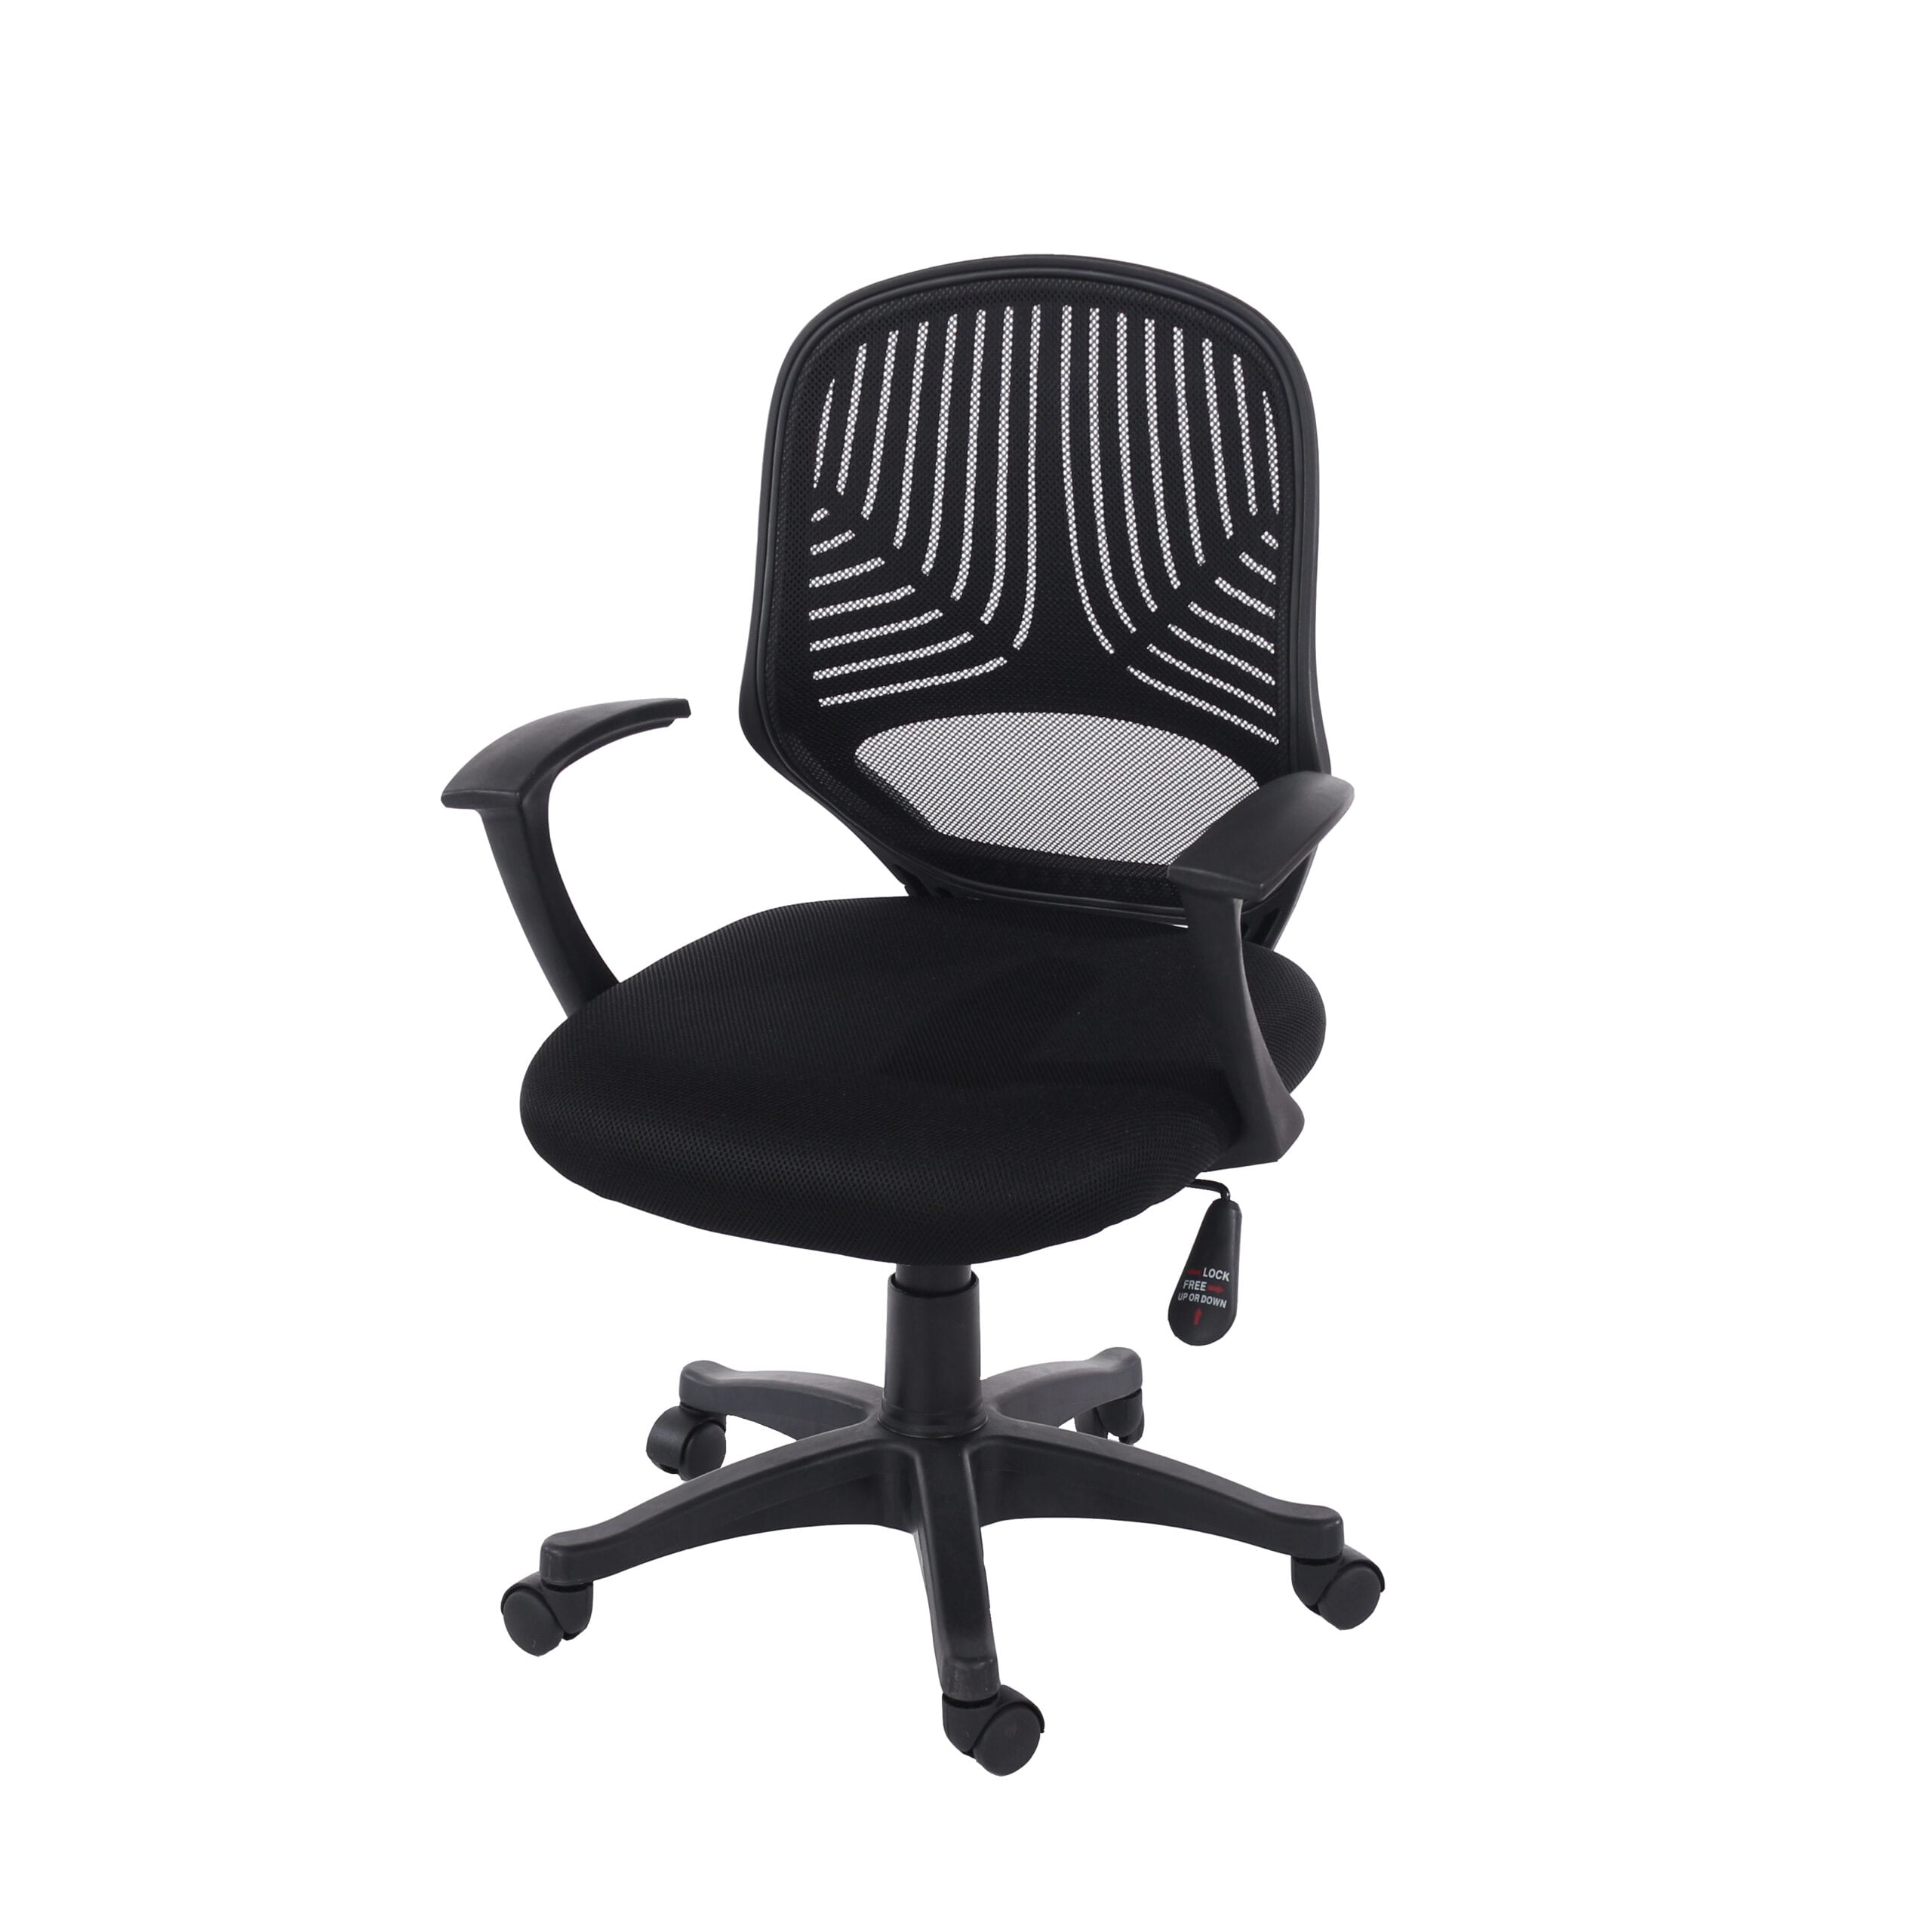 Lust home office chair in black mesh black fabric & black base